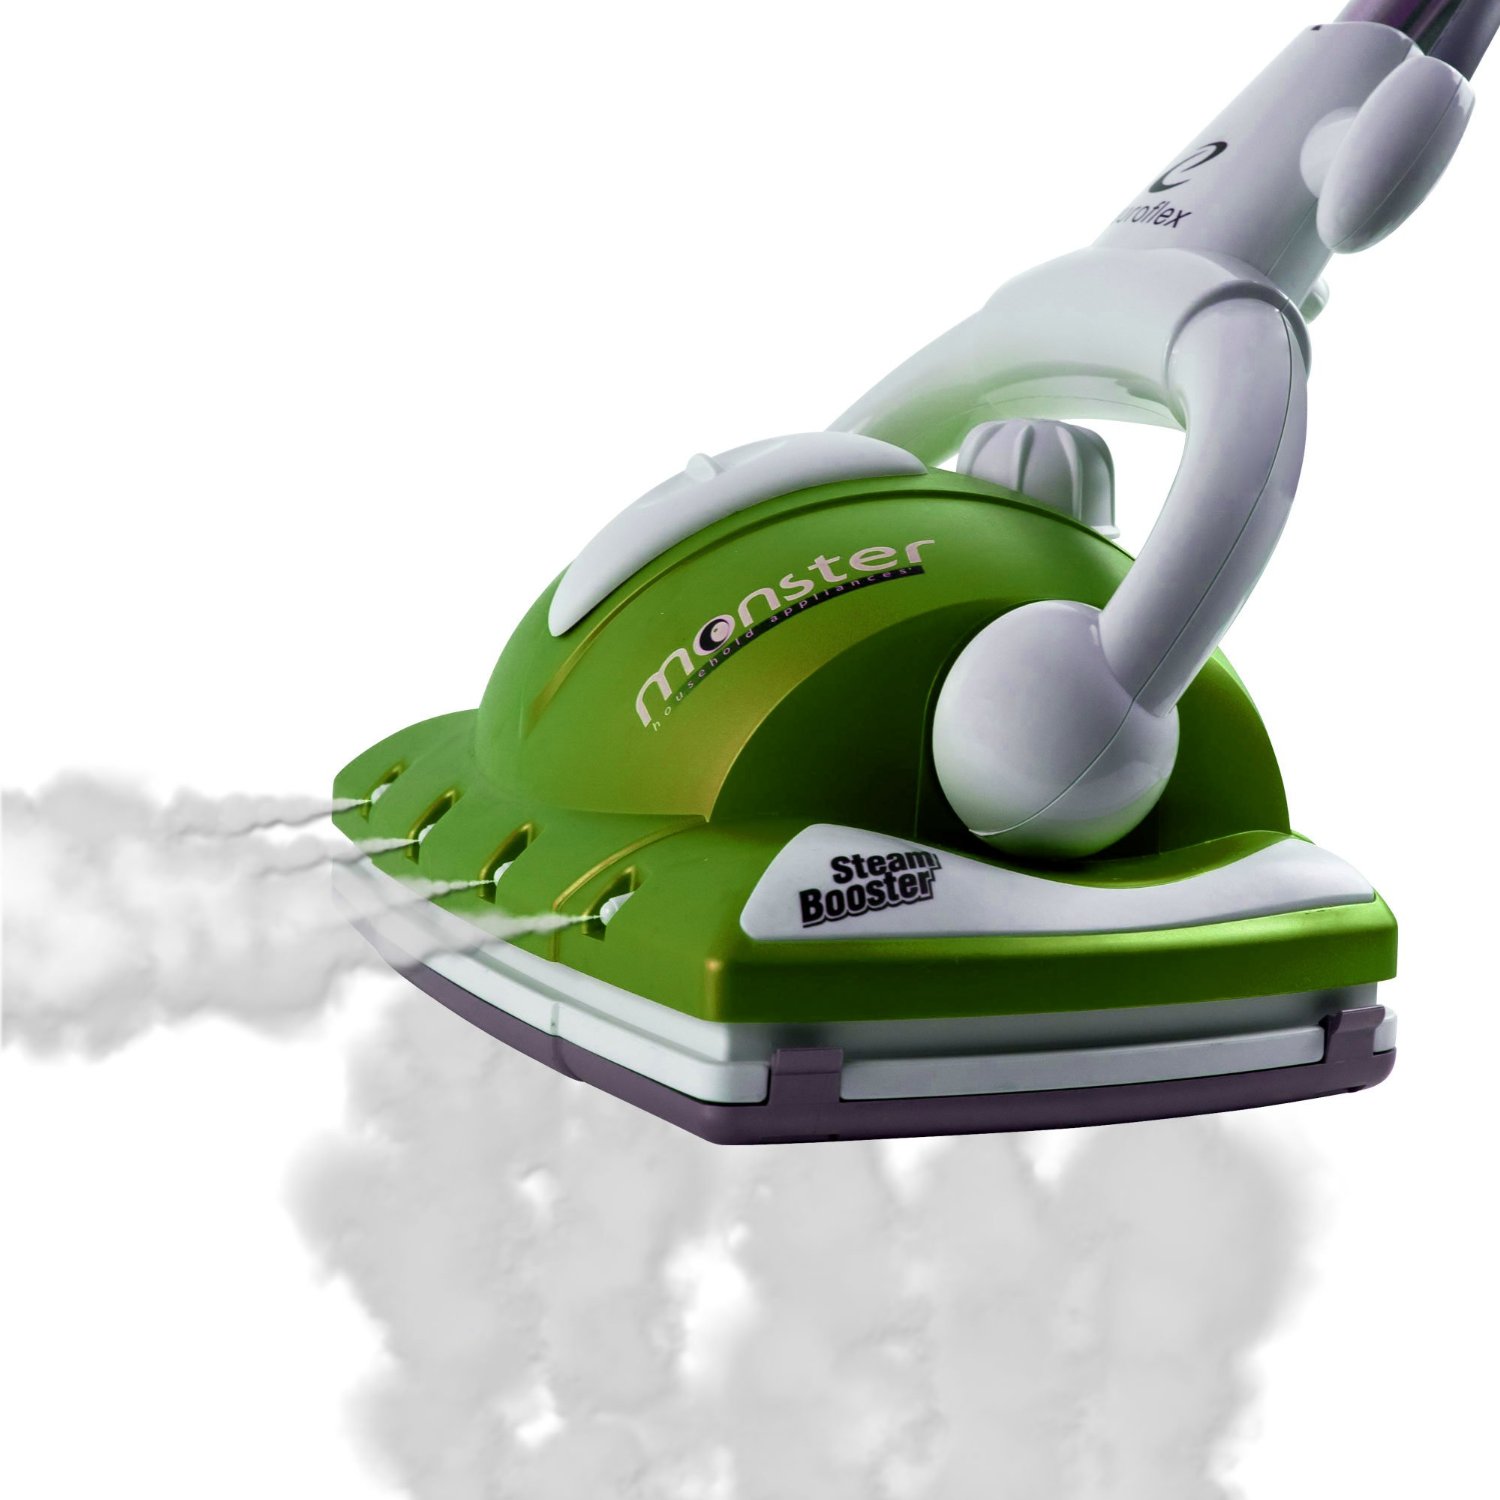 Euroflex Monster Steam Jet II 1200w Disinfecting Floor Steam Cleaner